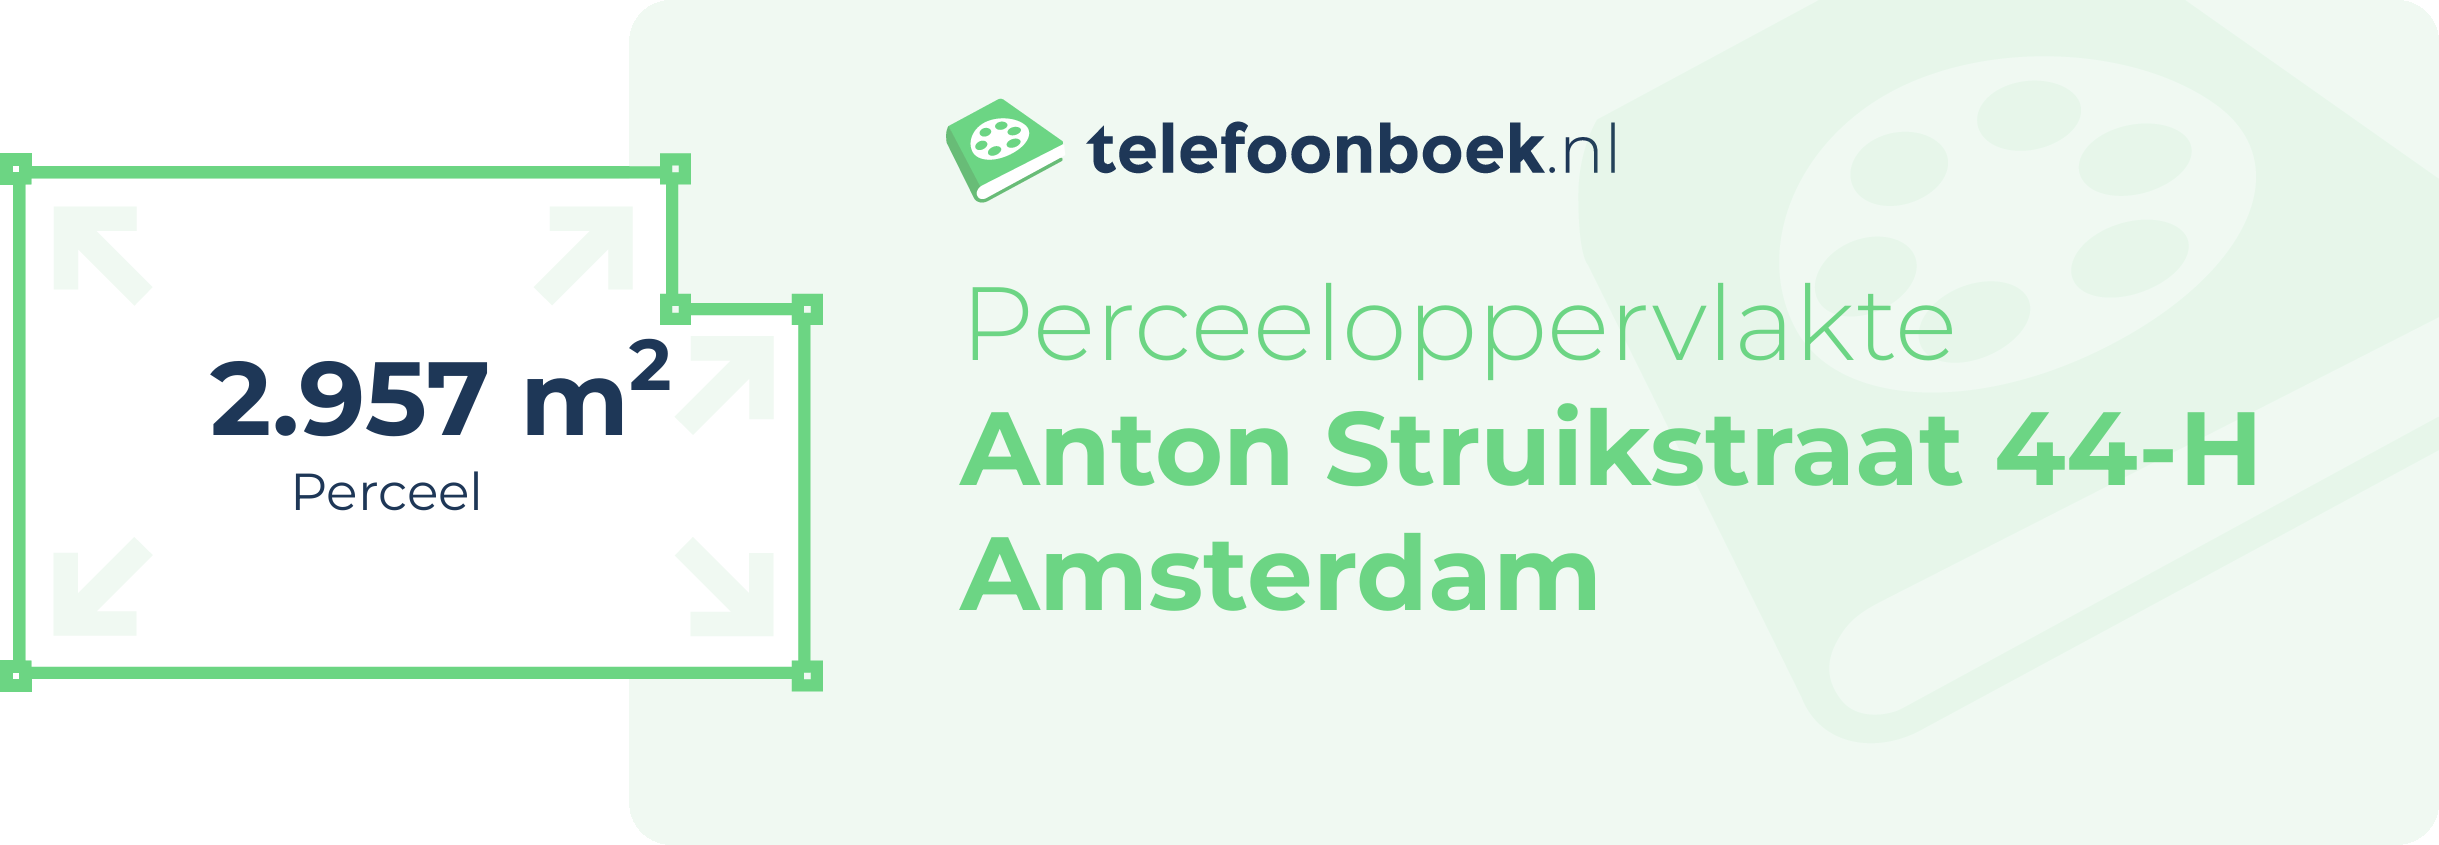 Perceeloppervlakte Anton Struikstraat 44-H Amsterdam